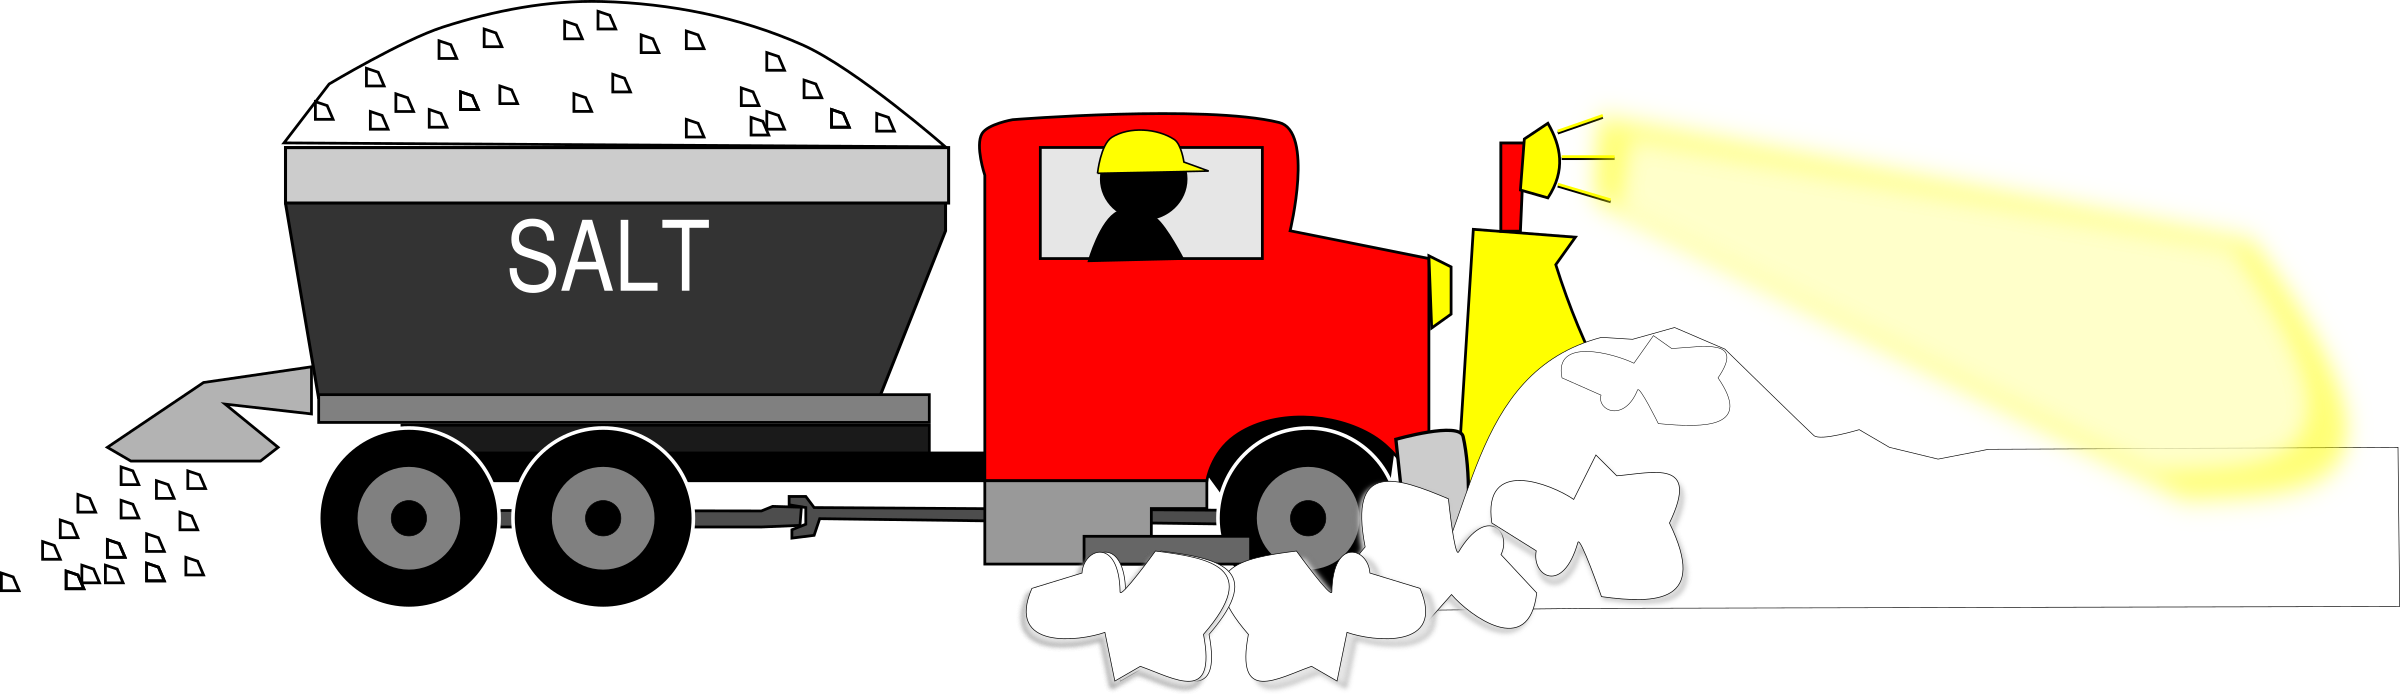 clip art snow plow truck - photo #43